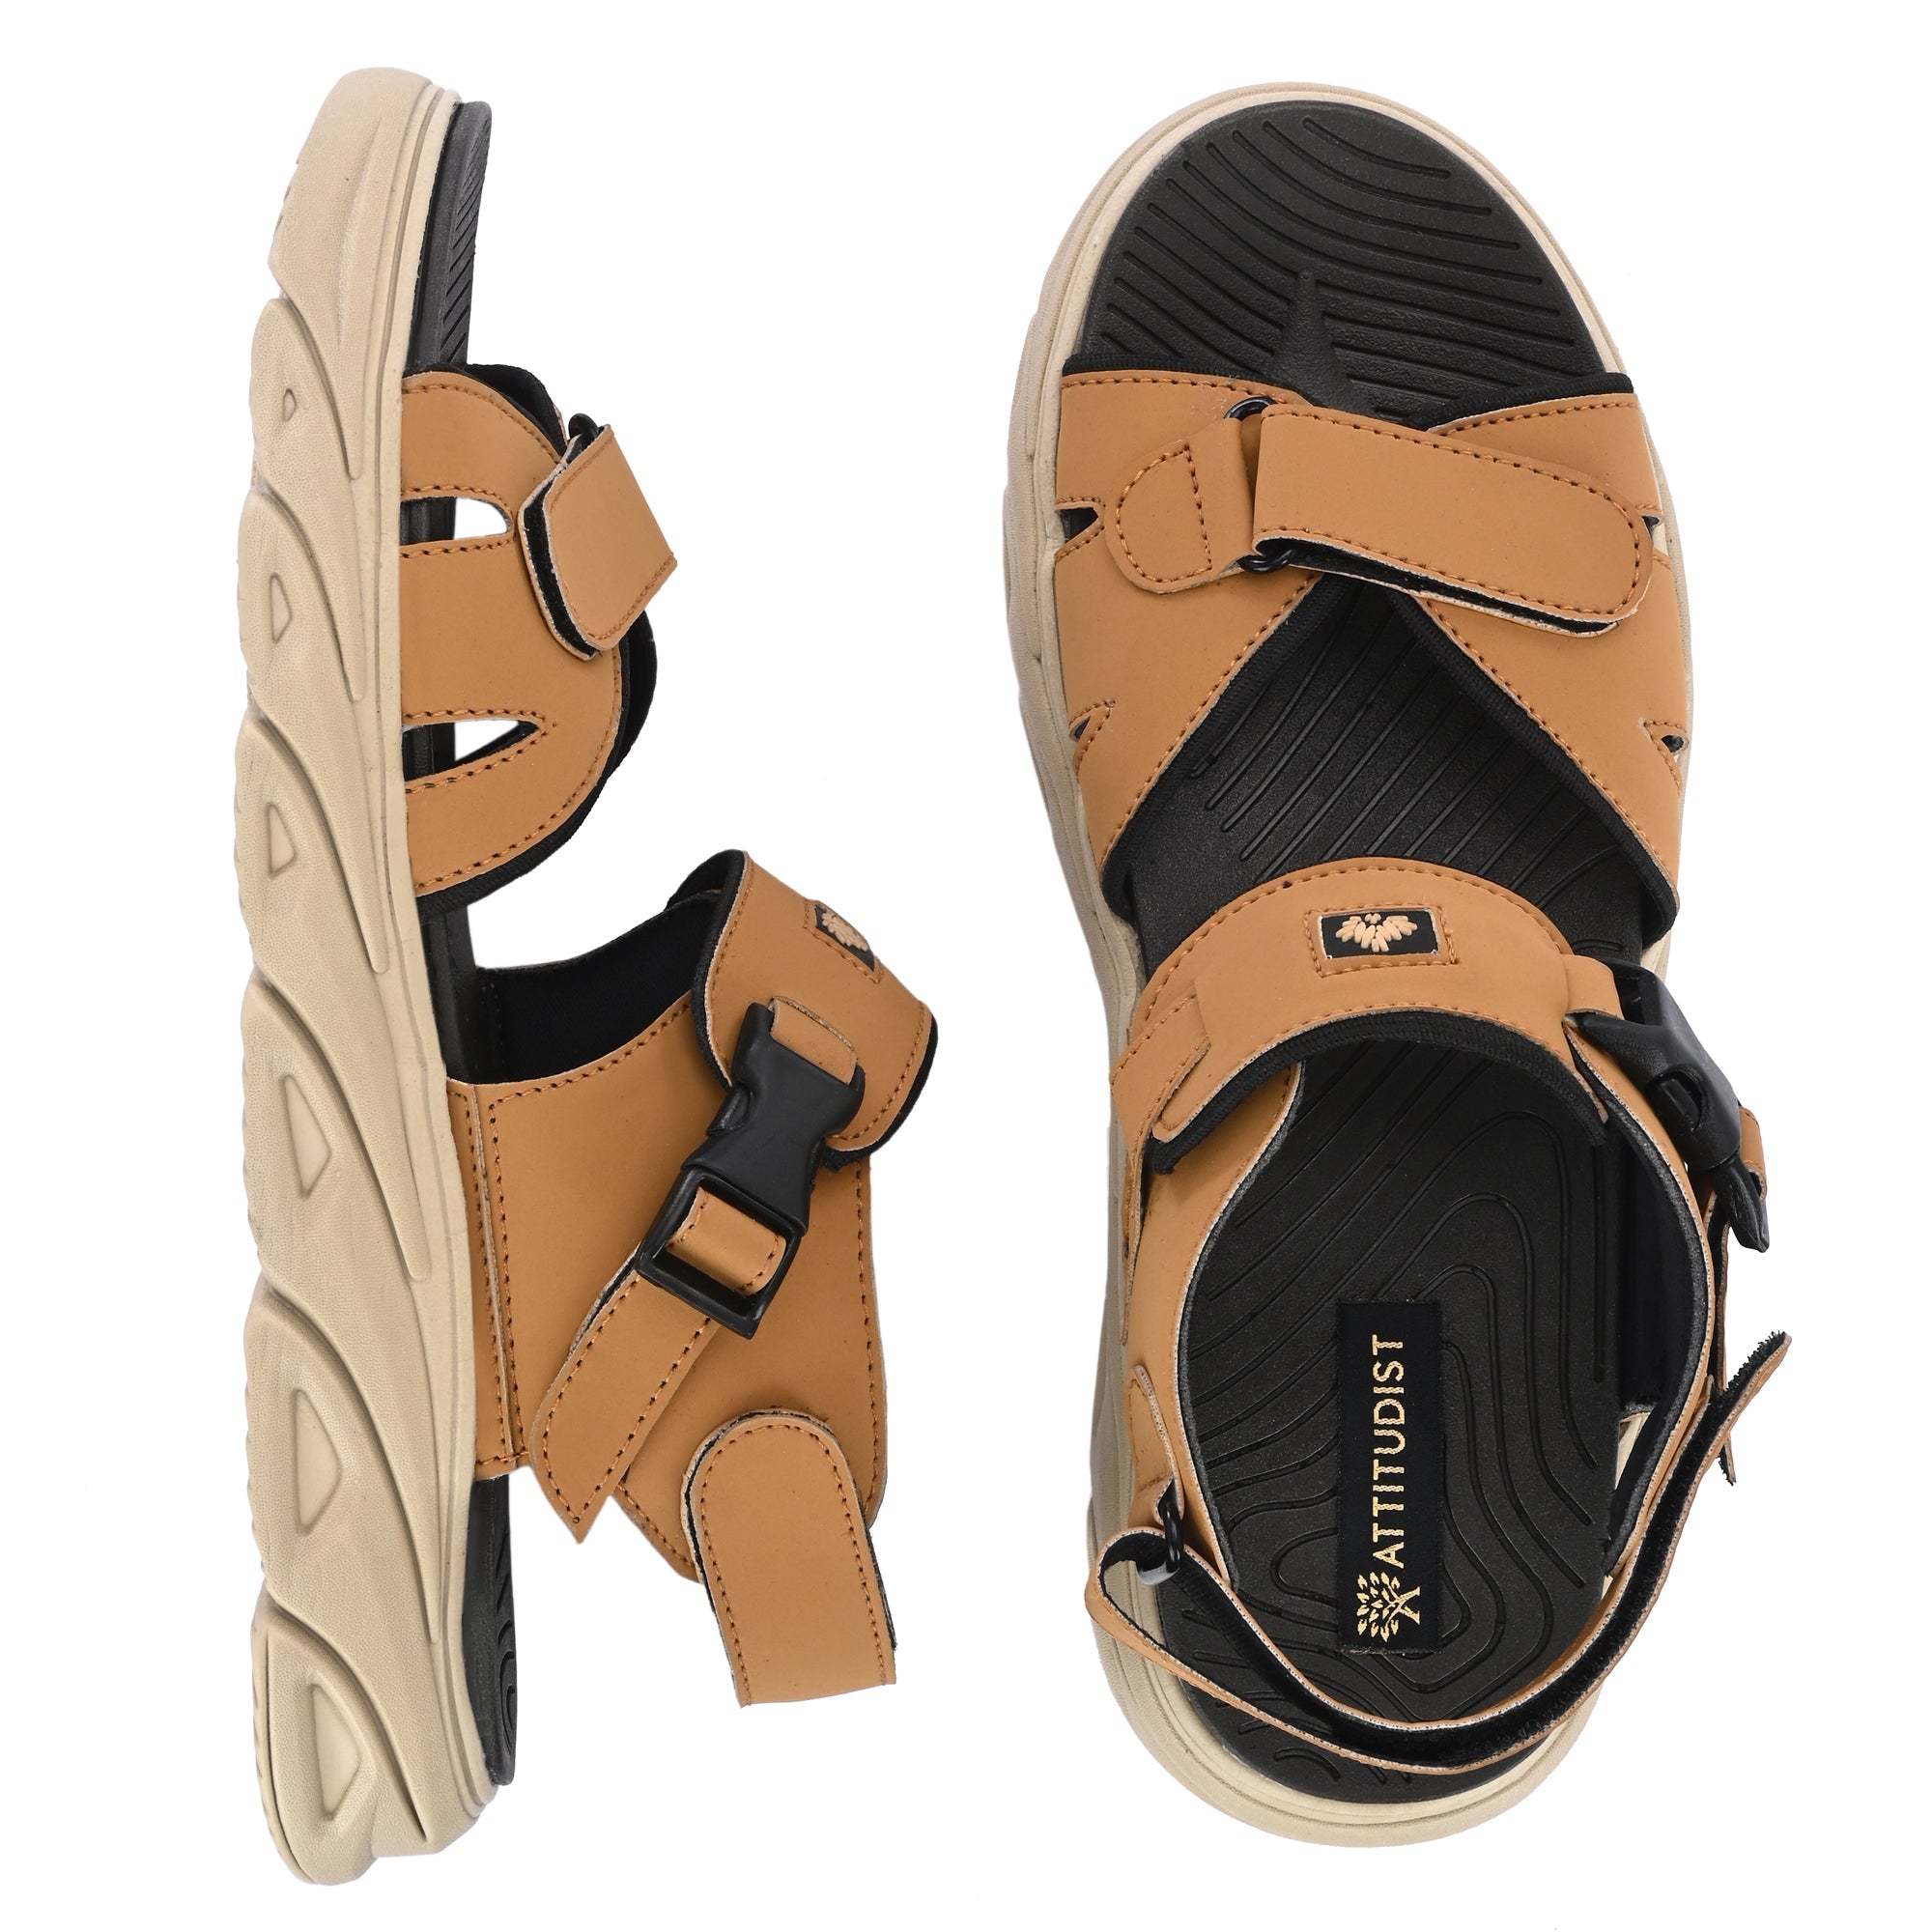 attitudist-mens-handcrafted-tan-casual-sandal